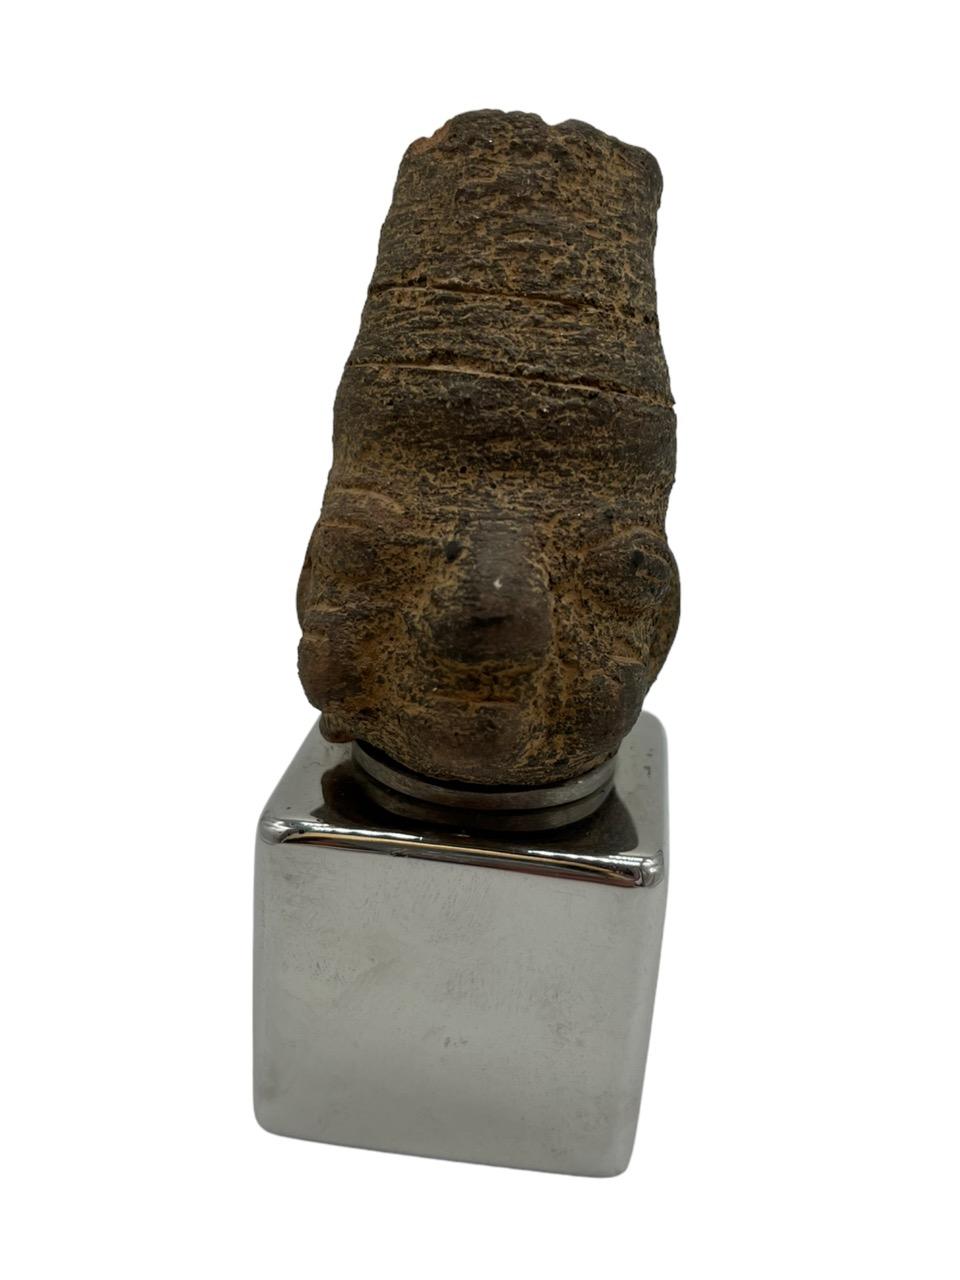 Primitive Head Figure From the Pre-Columbian Period Made of Stone In Distressed Condition In North Miami, FL